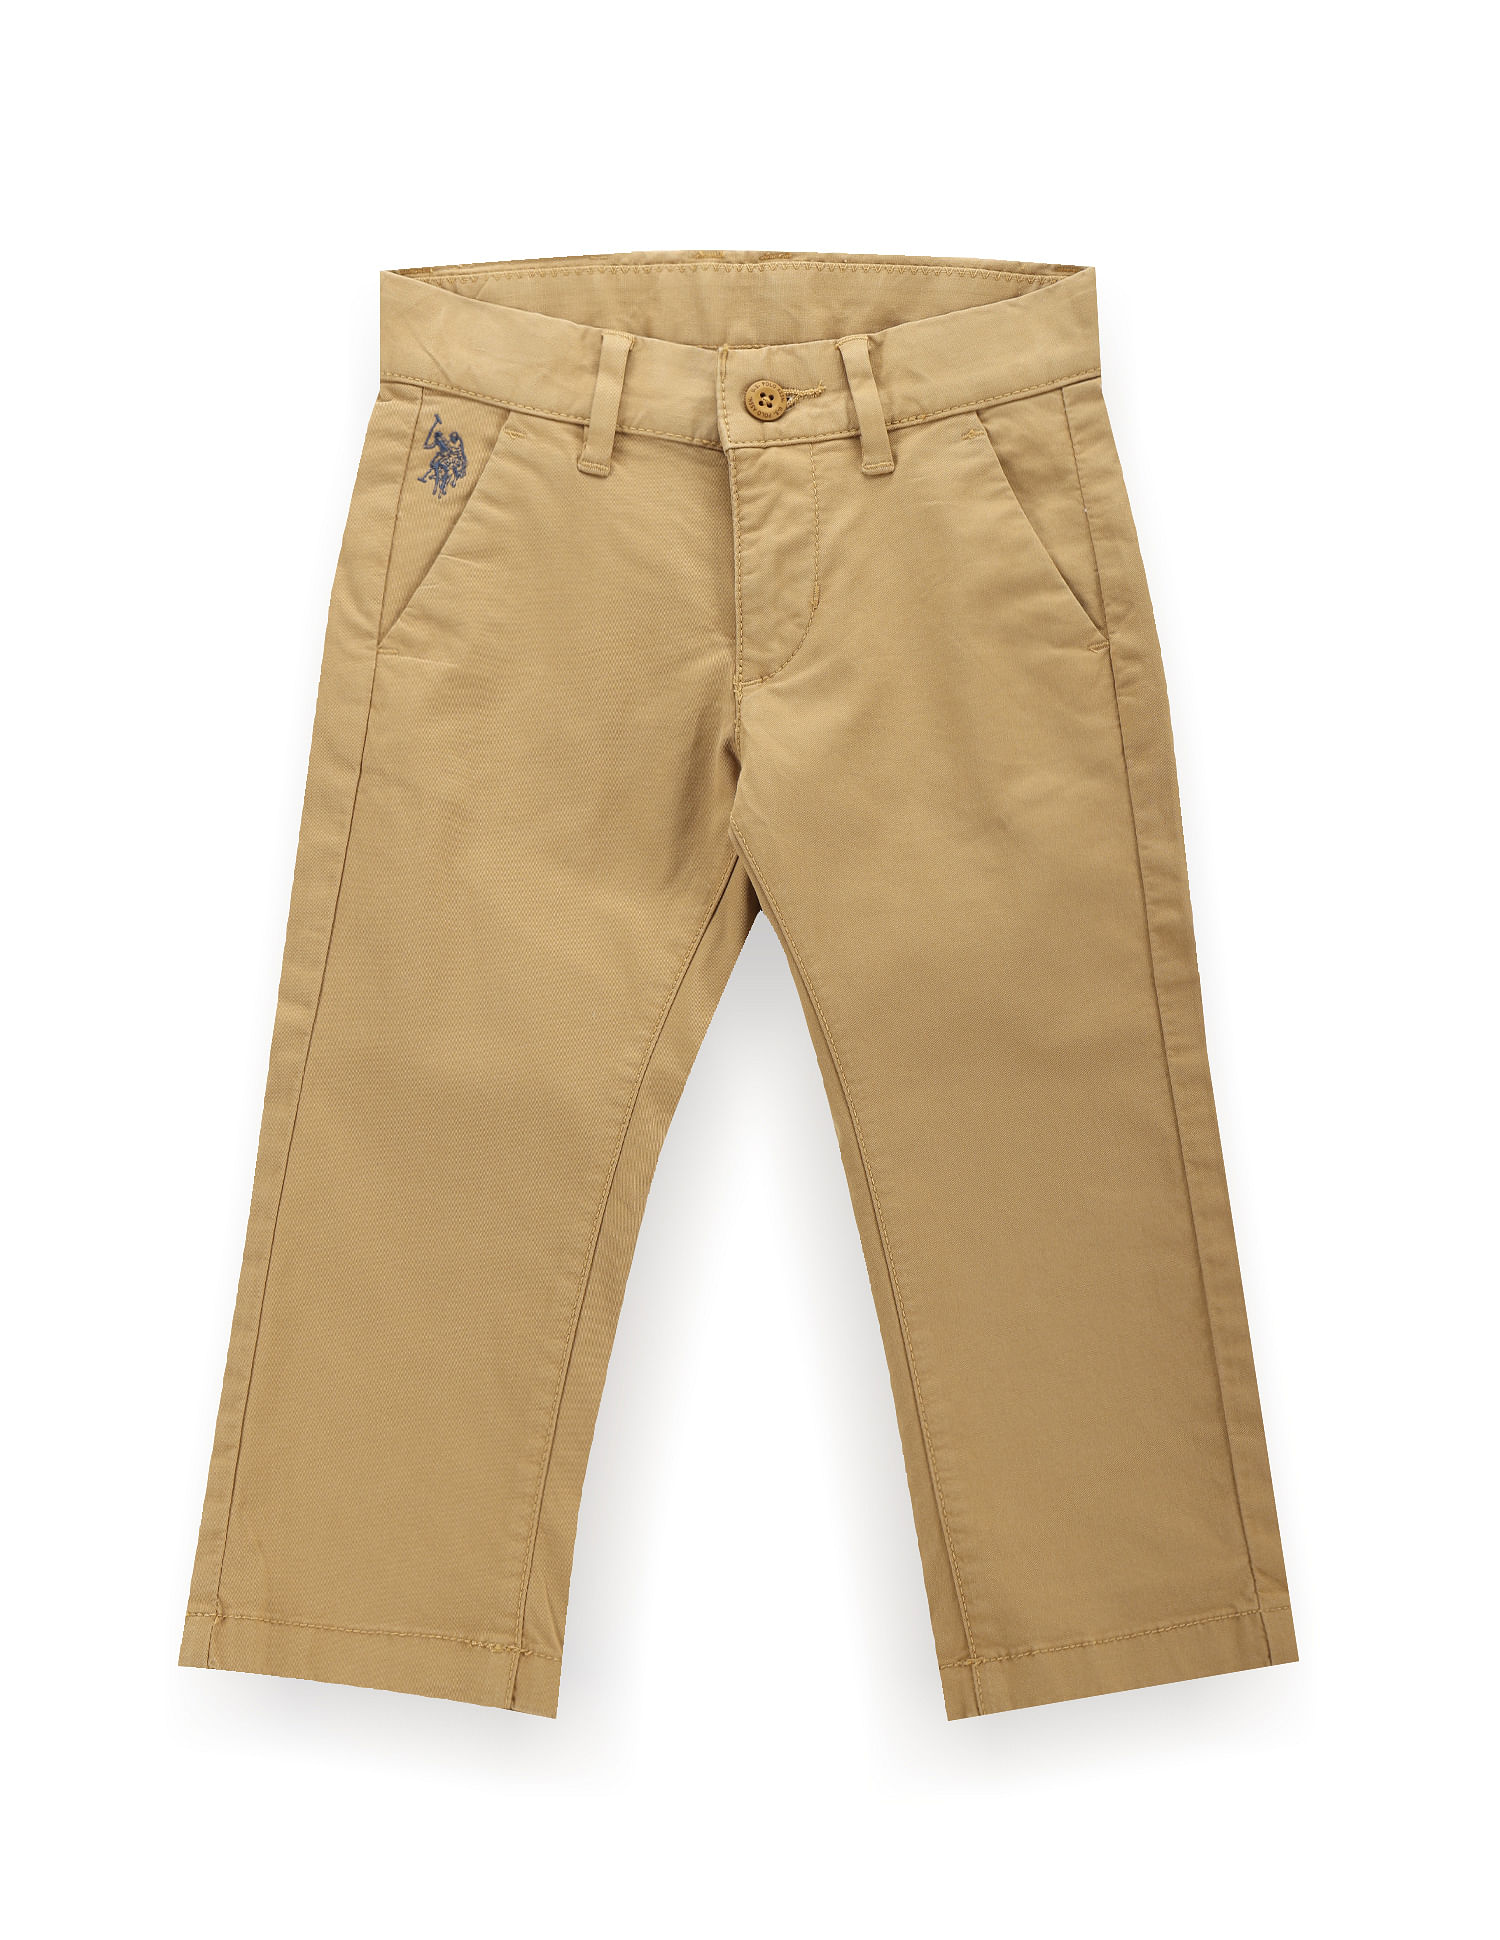 Versa Navy Washable Cotton Stretch Pant - Custom Fit Pants